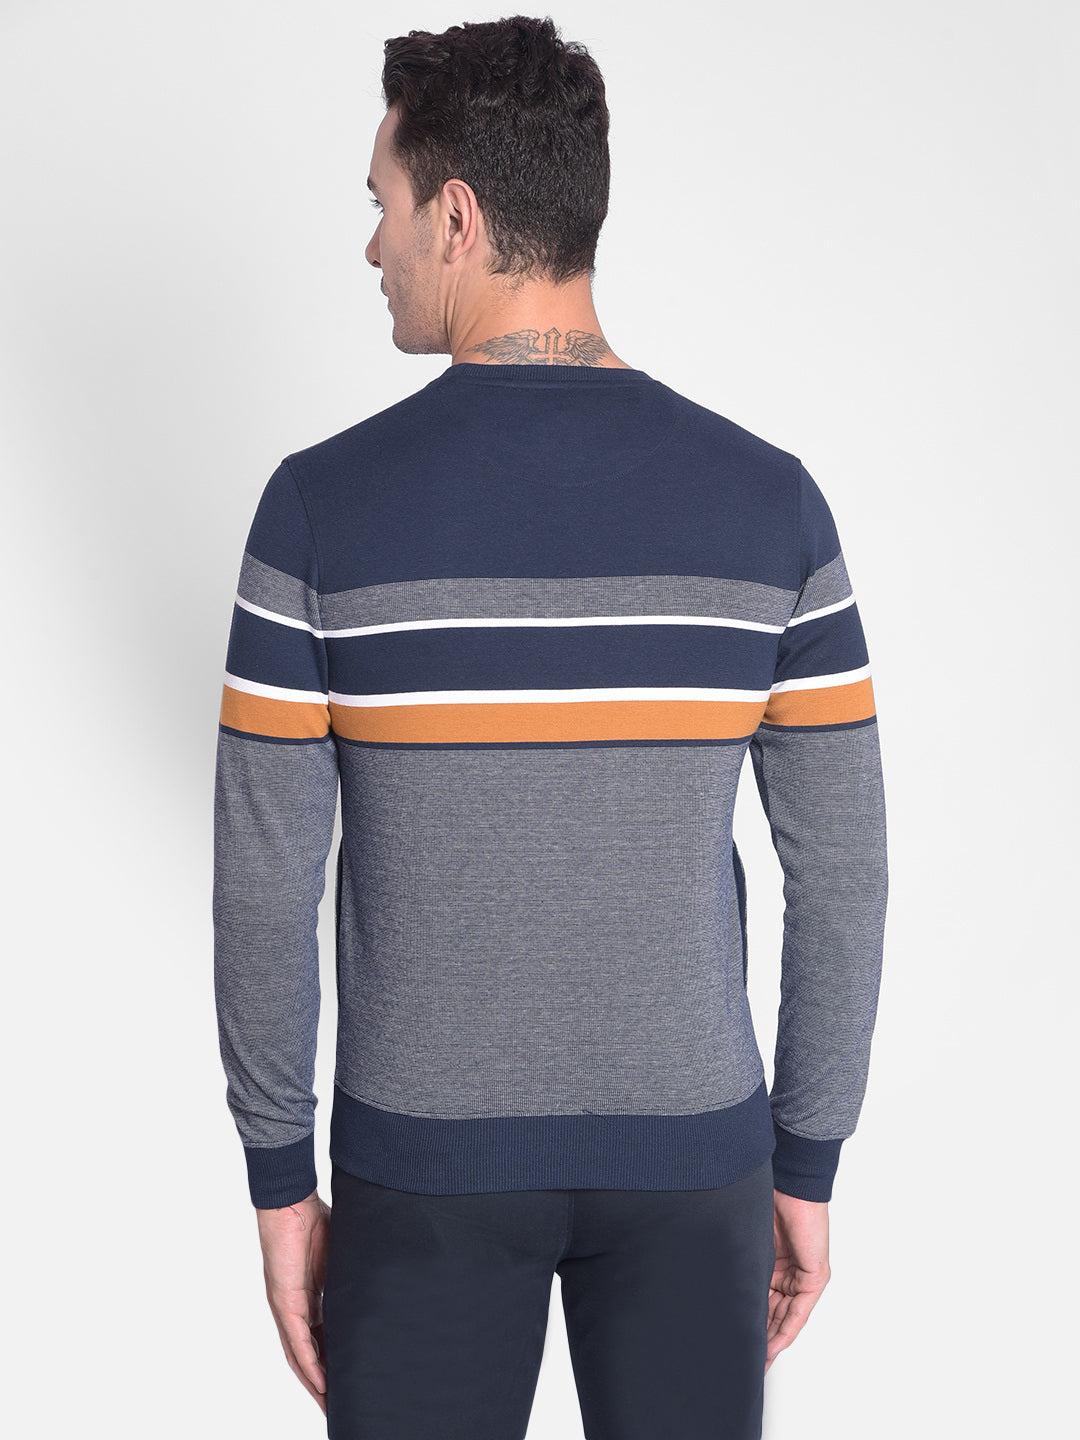 Navy Blue Striped Sweatshirt-Mens Sweatshirts-Crimsoune Club